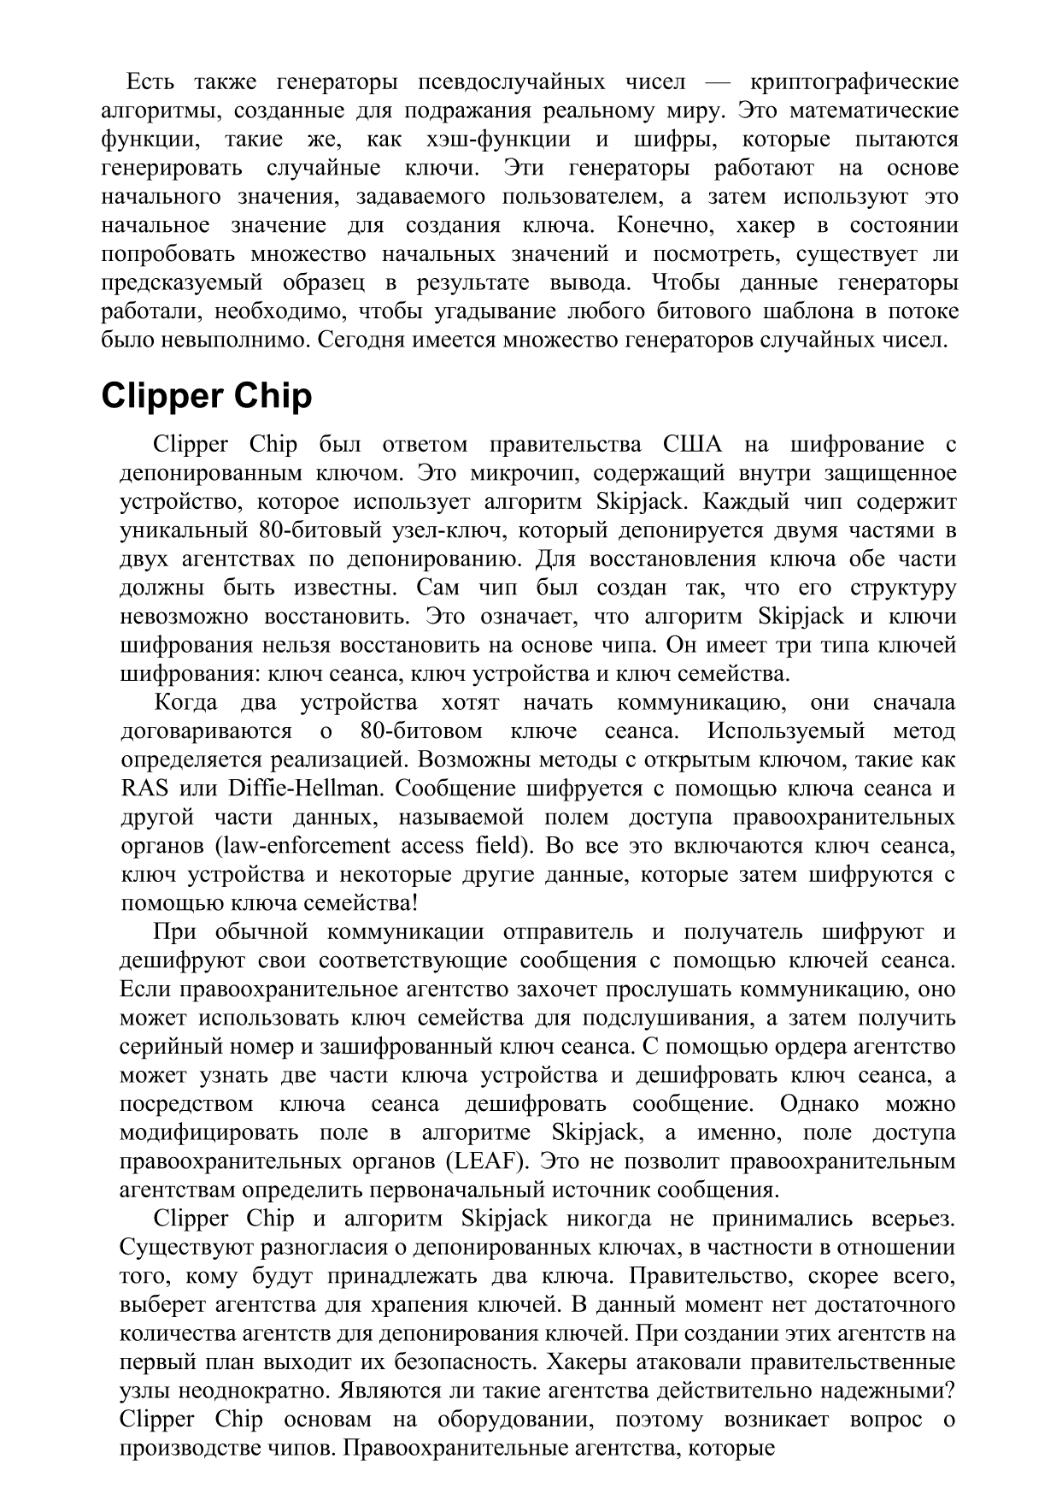 Clipper Chip